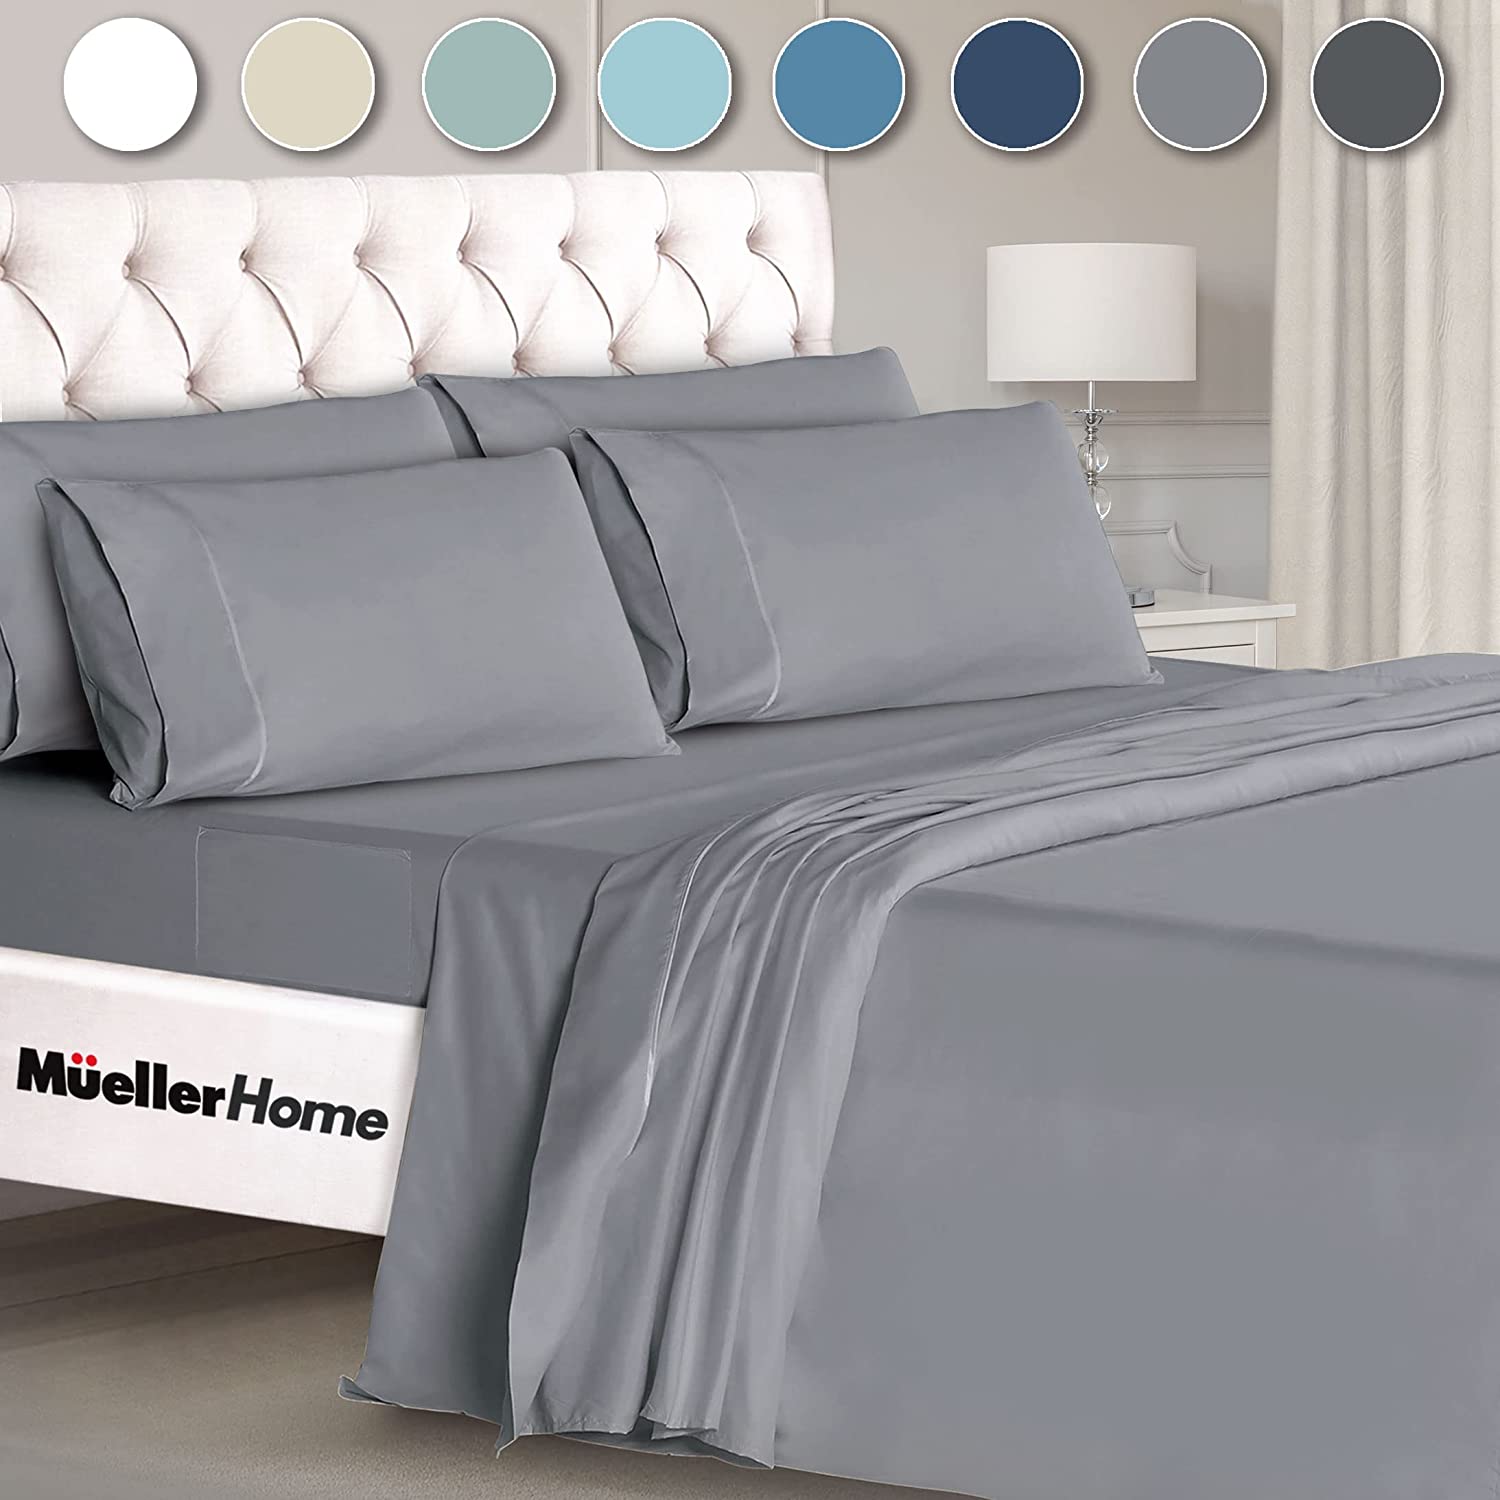 muellerhome_Premium-Hotel-Collection-6-Piece-FULL-SIZE-Sheet-Set-Light-Gray